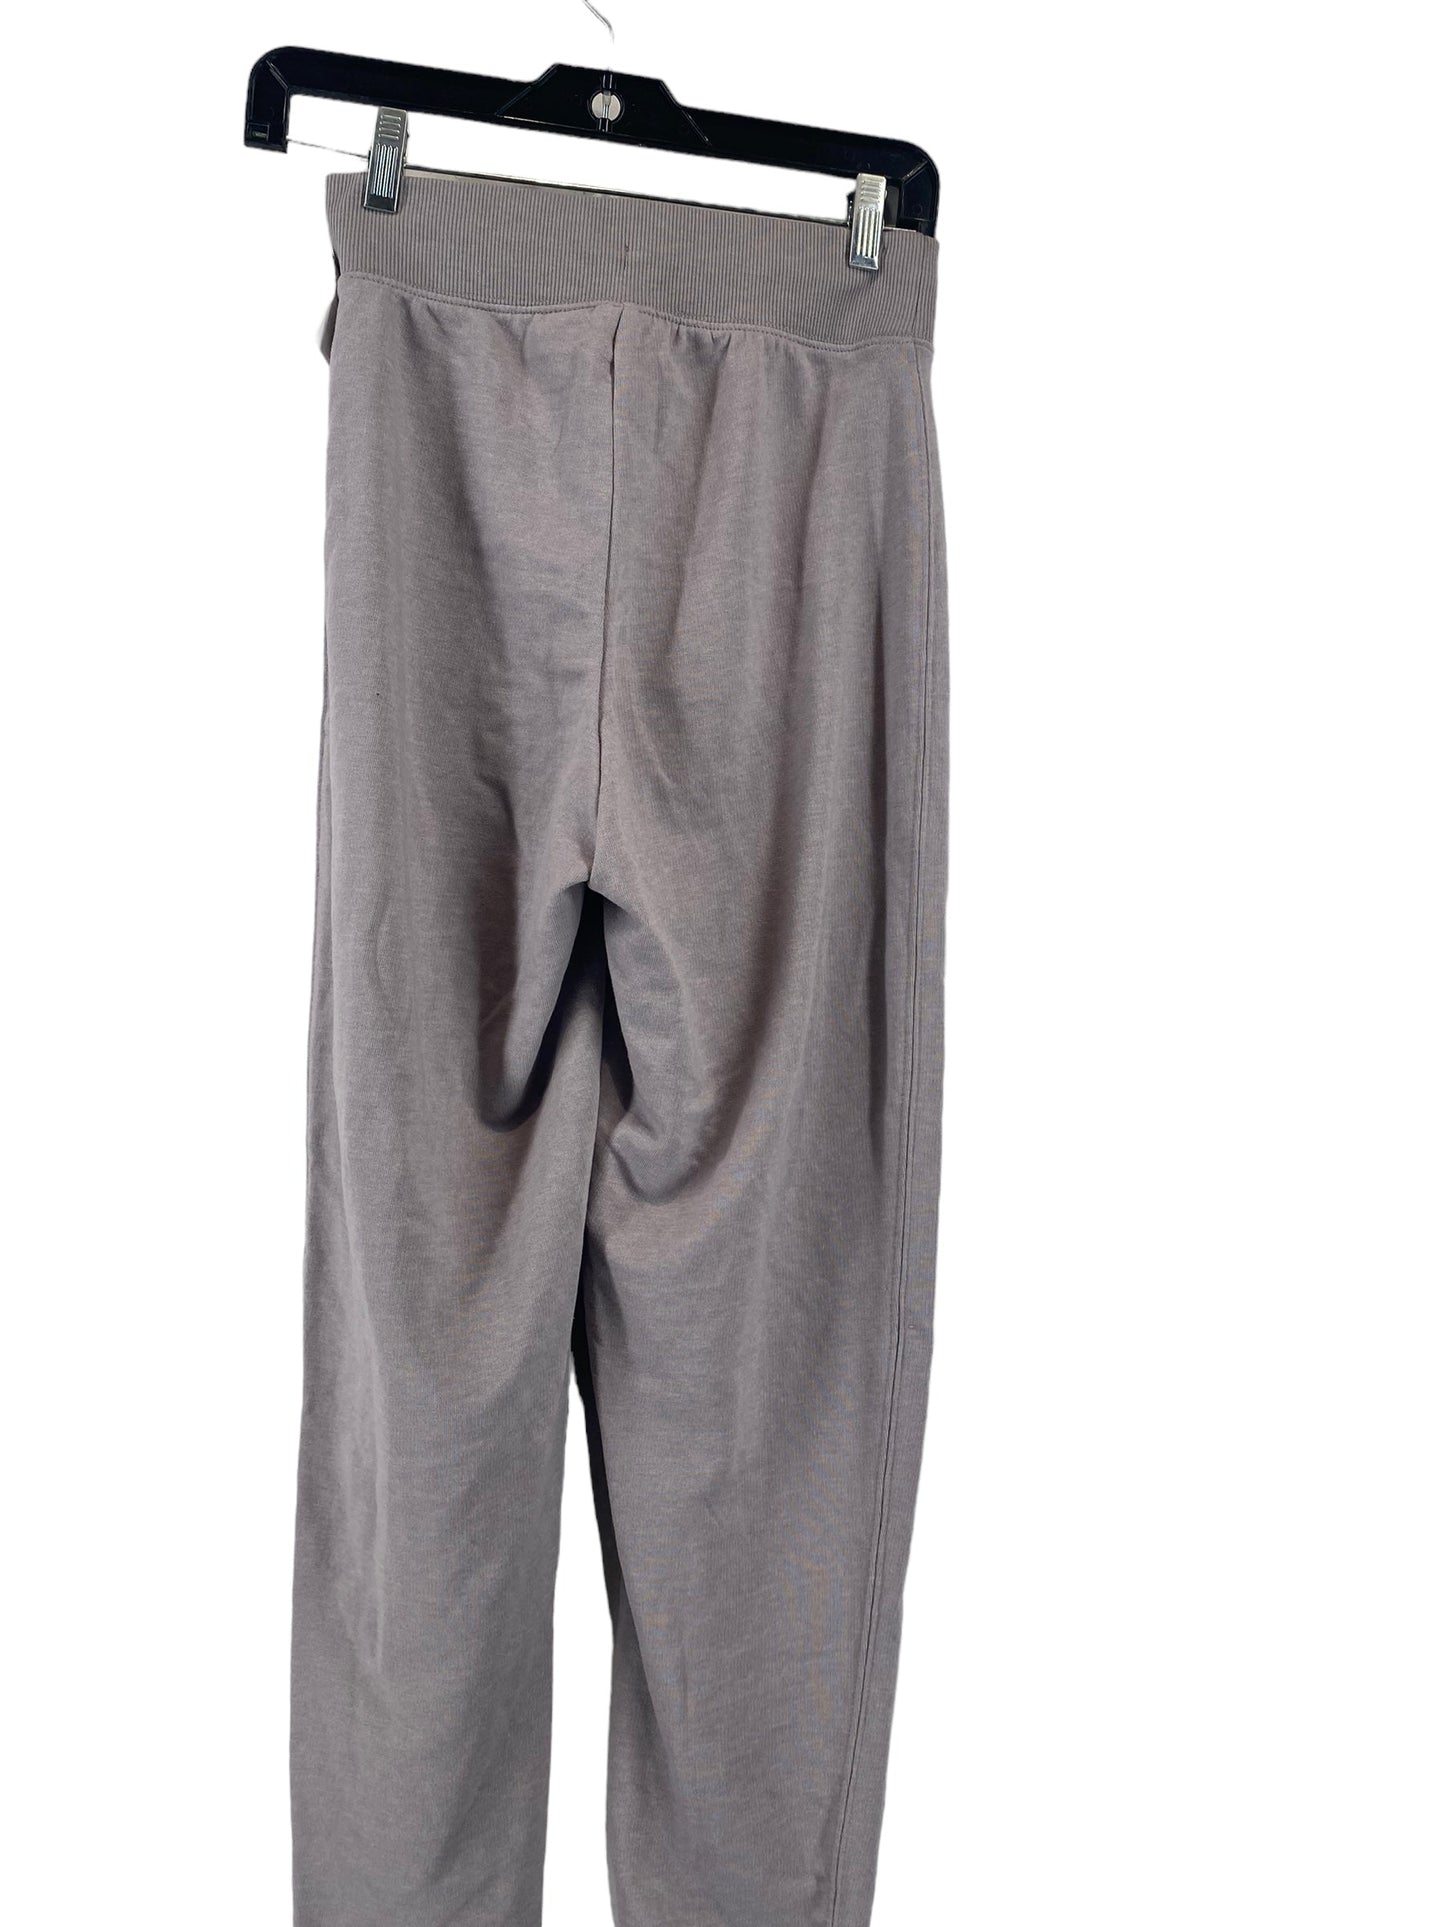 Pants Joggers By H&m  Size: Xs